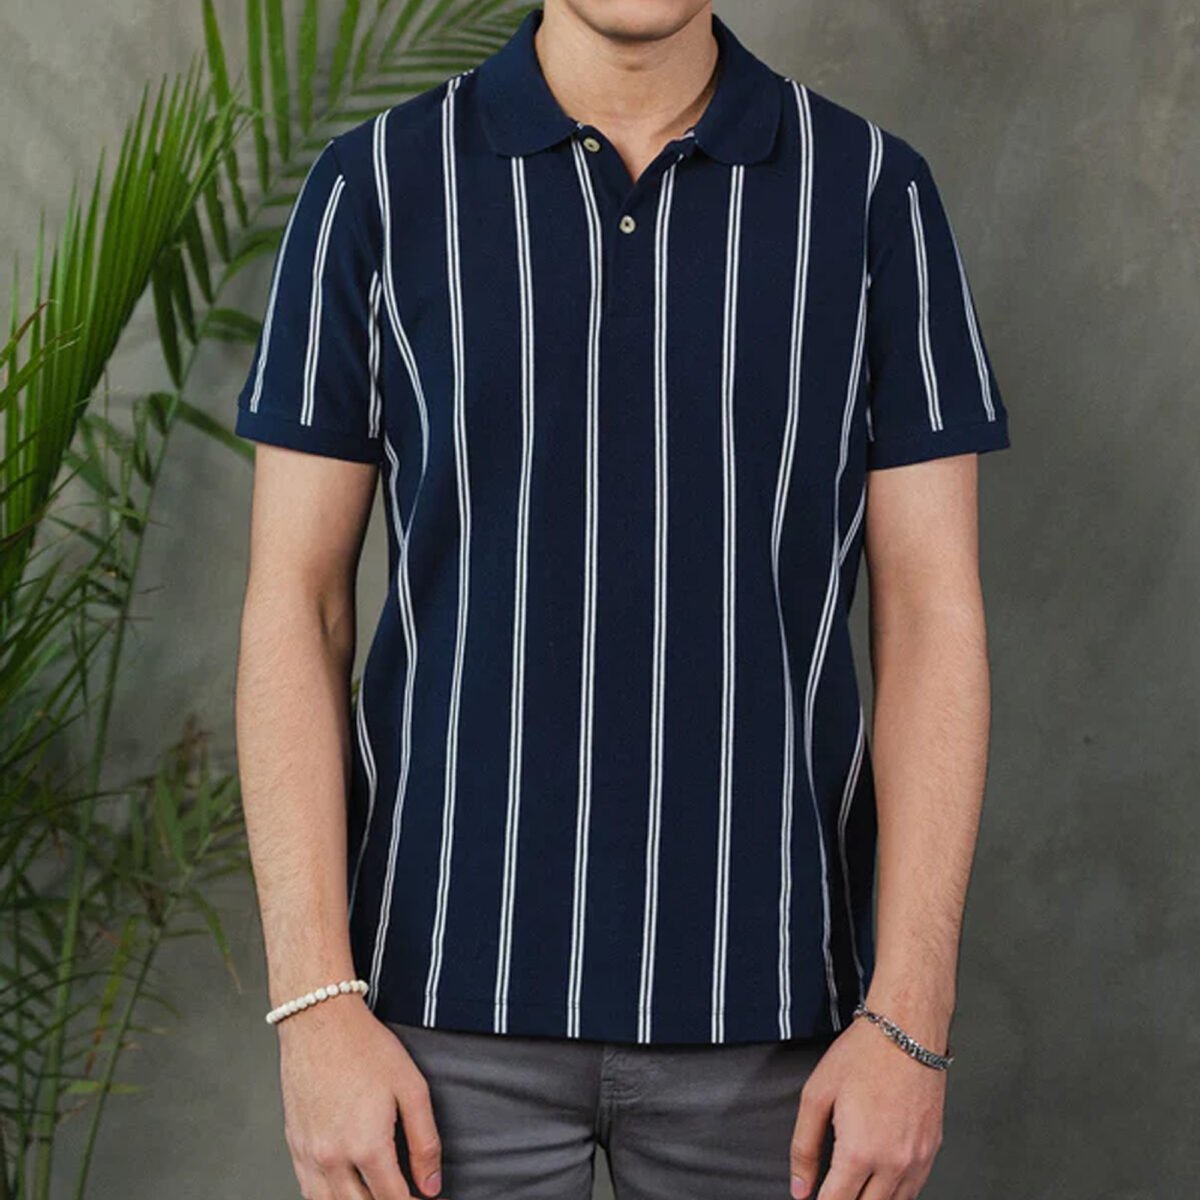 Stripes fashionable polo shirts